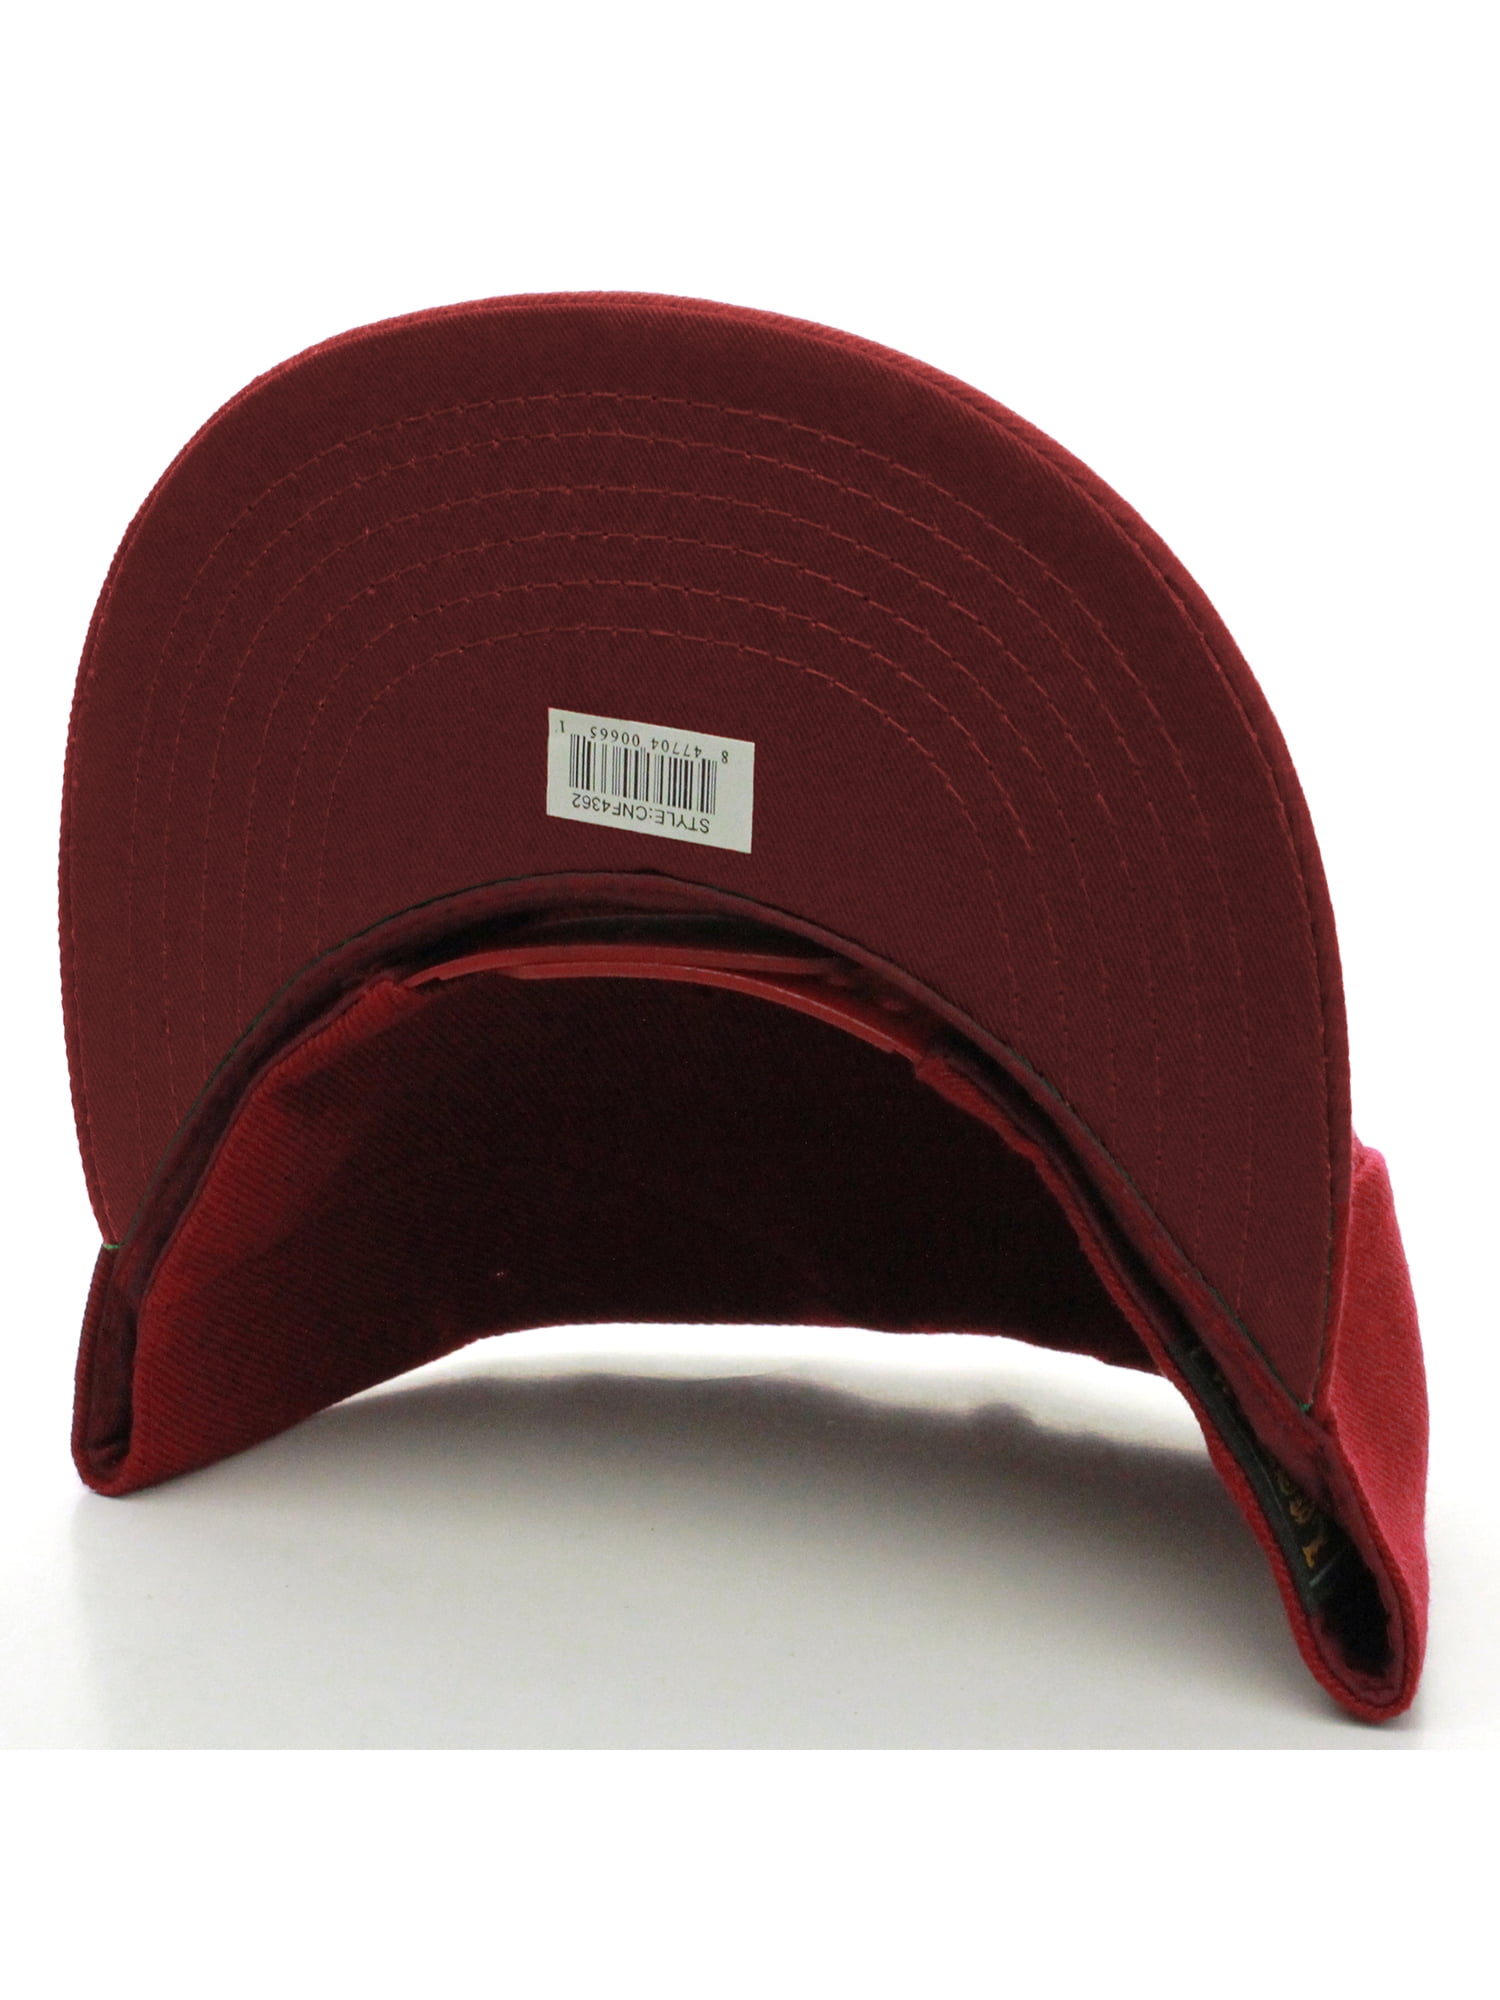 CFI Trucking Joplin, Mo. Burgundy Adjustable Snapback Cap Hat Men's  Accessories